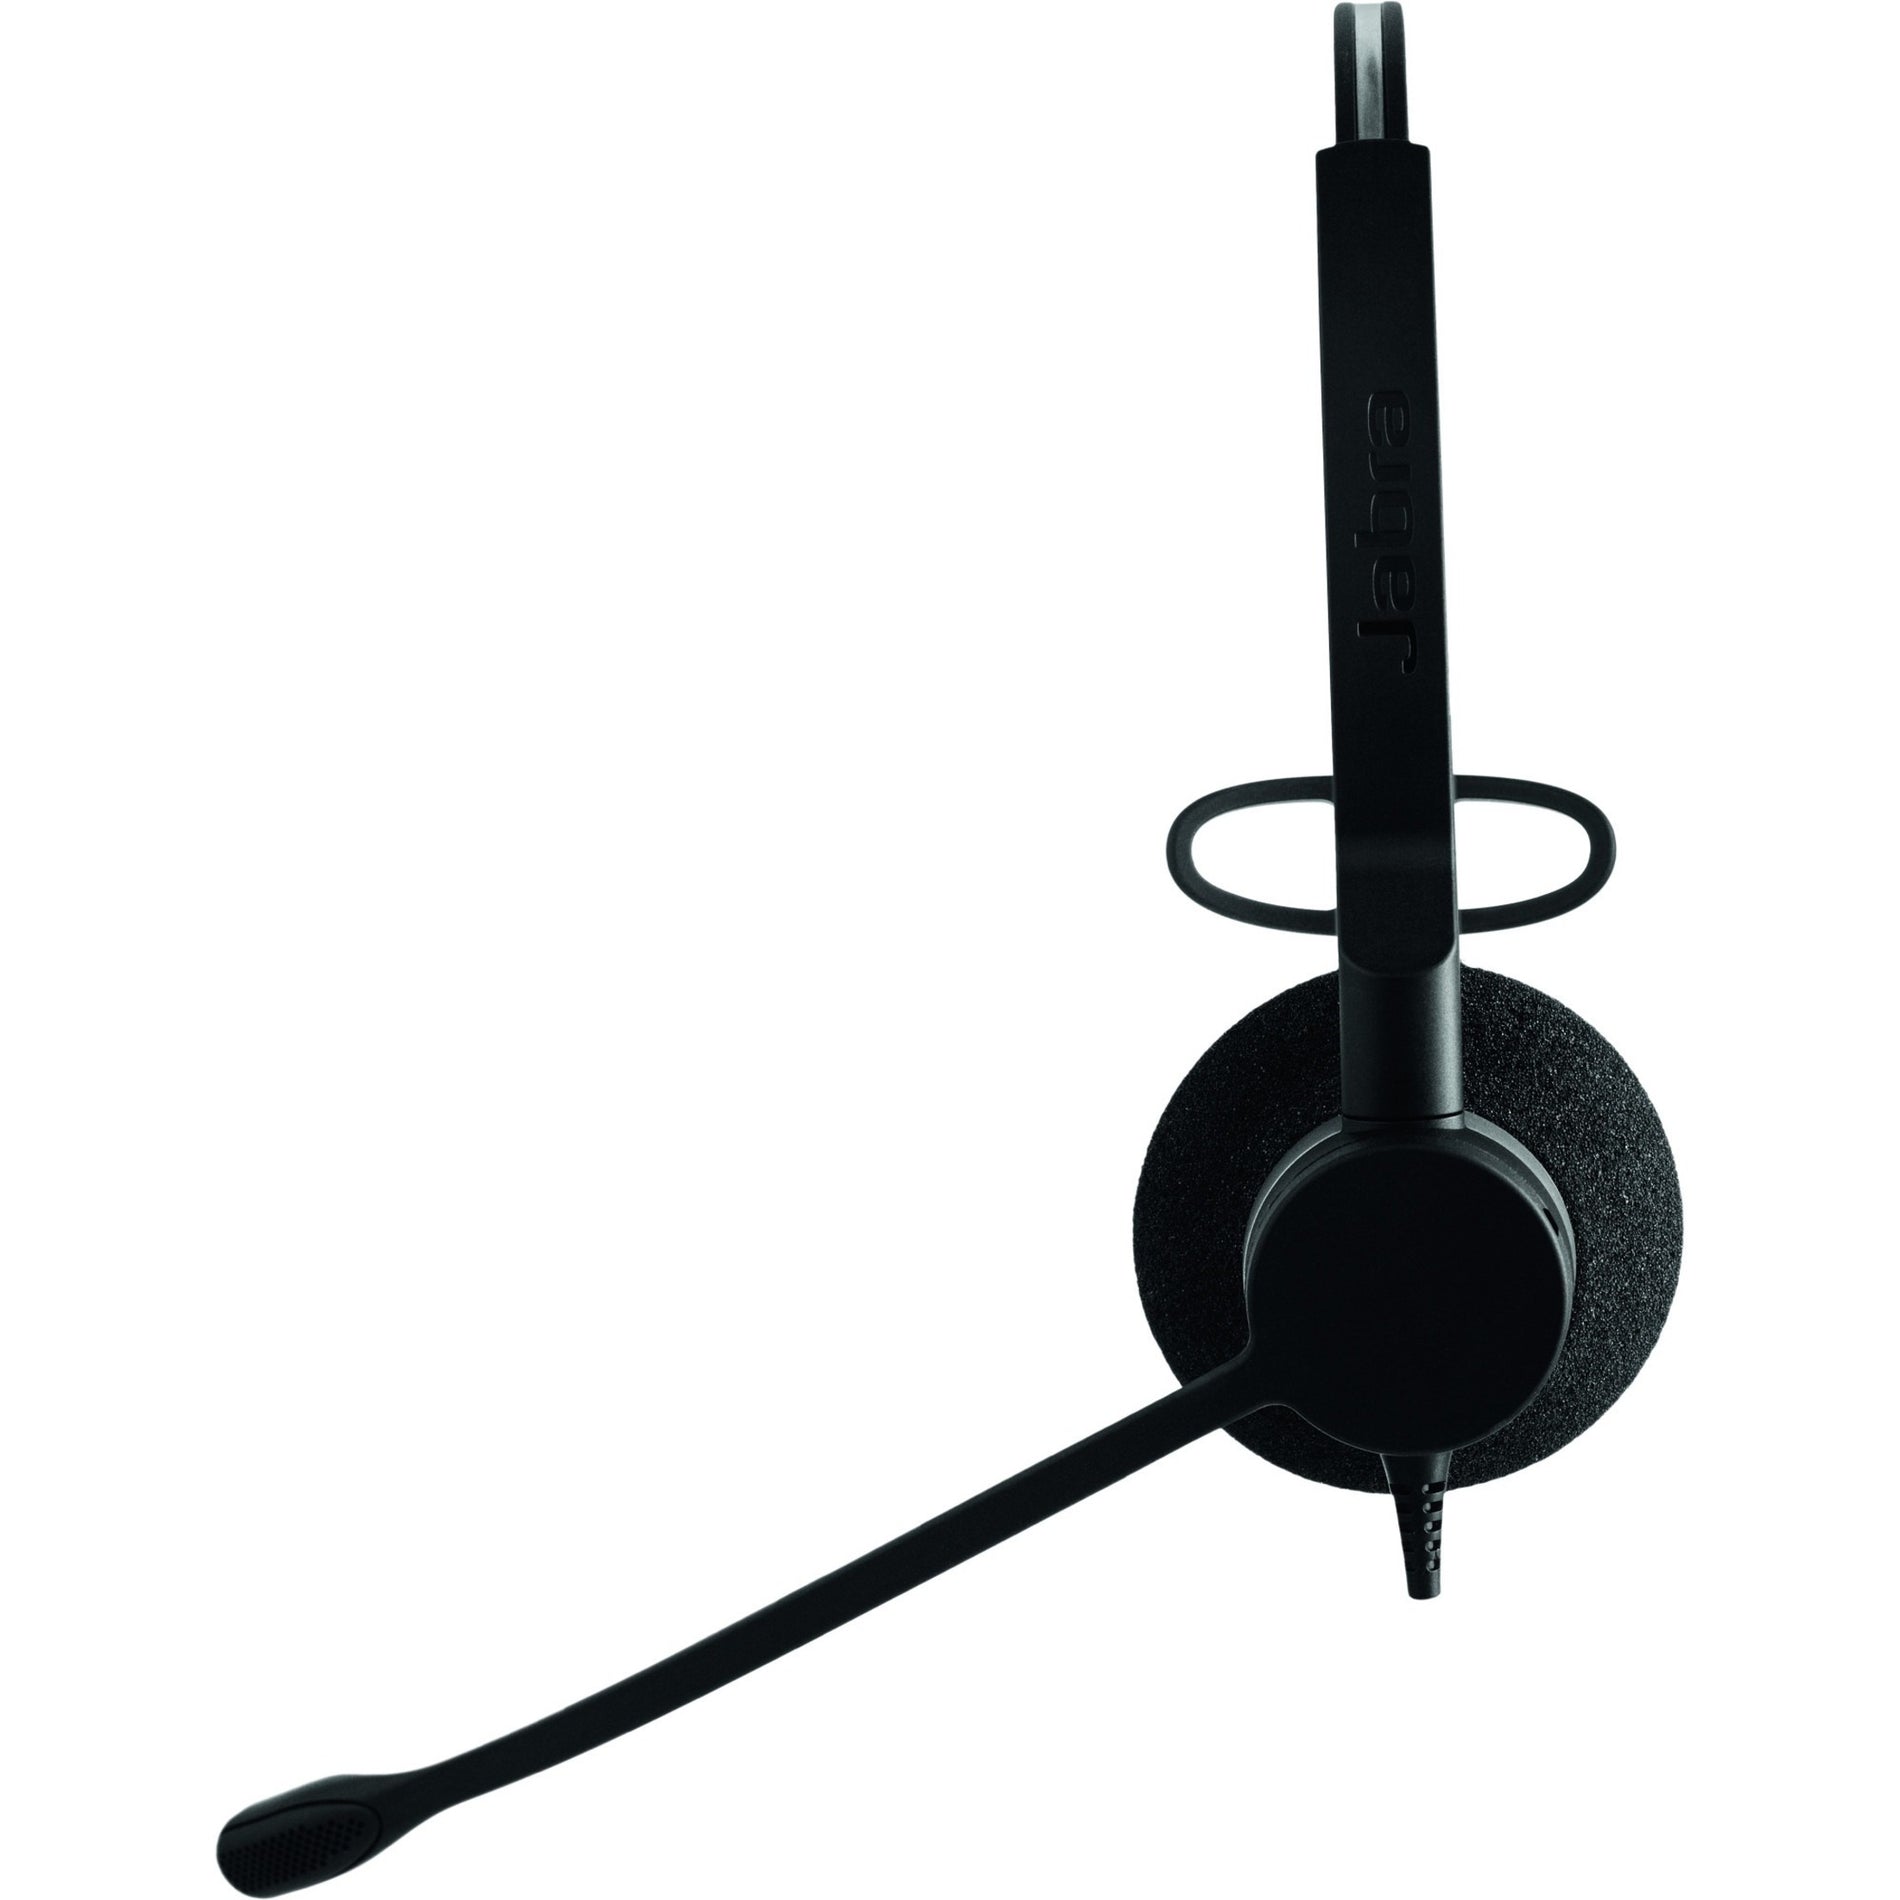 Jabra 2393-823-189 BIZ 2300 Headset, Over-the-head Mono USB Type C Wired Headset